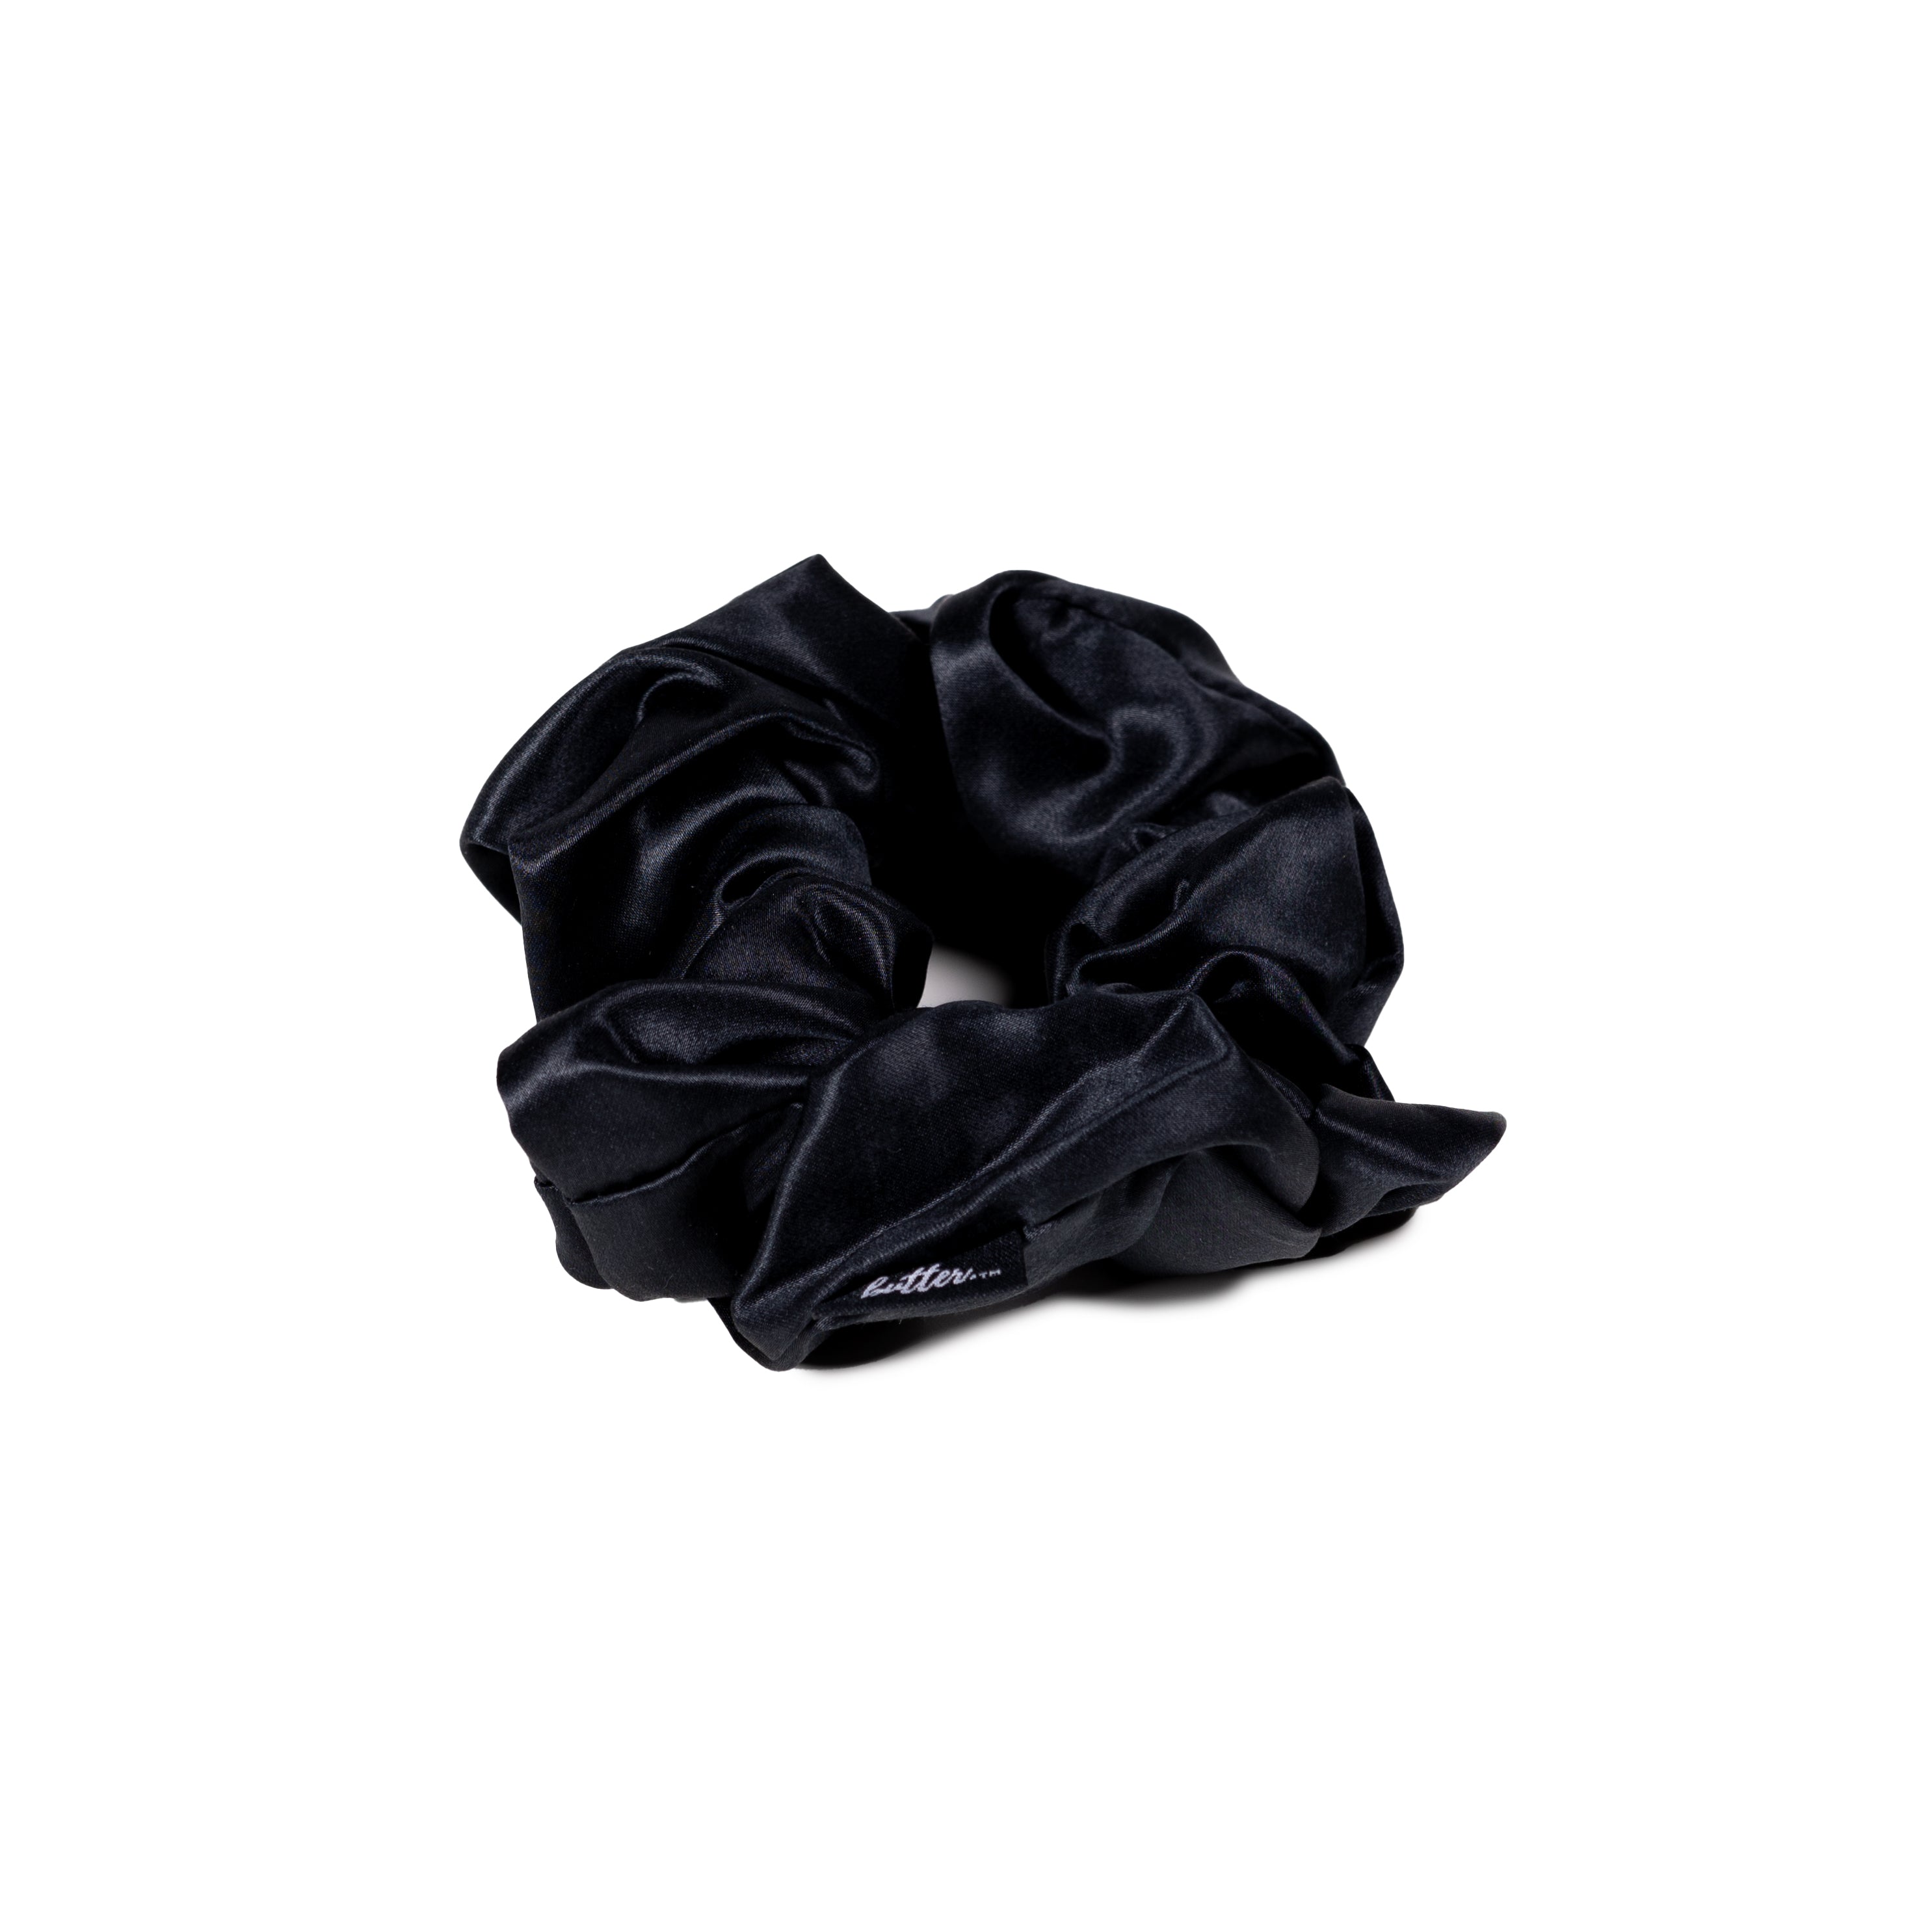 Black Silk Scrunchie